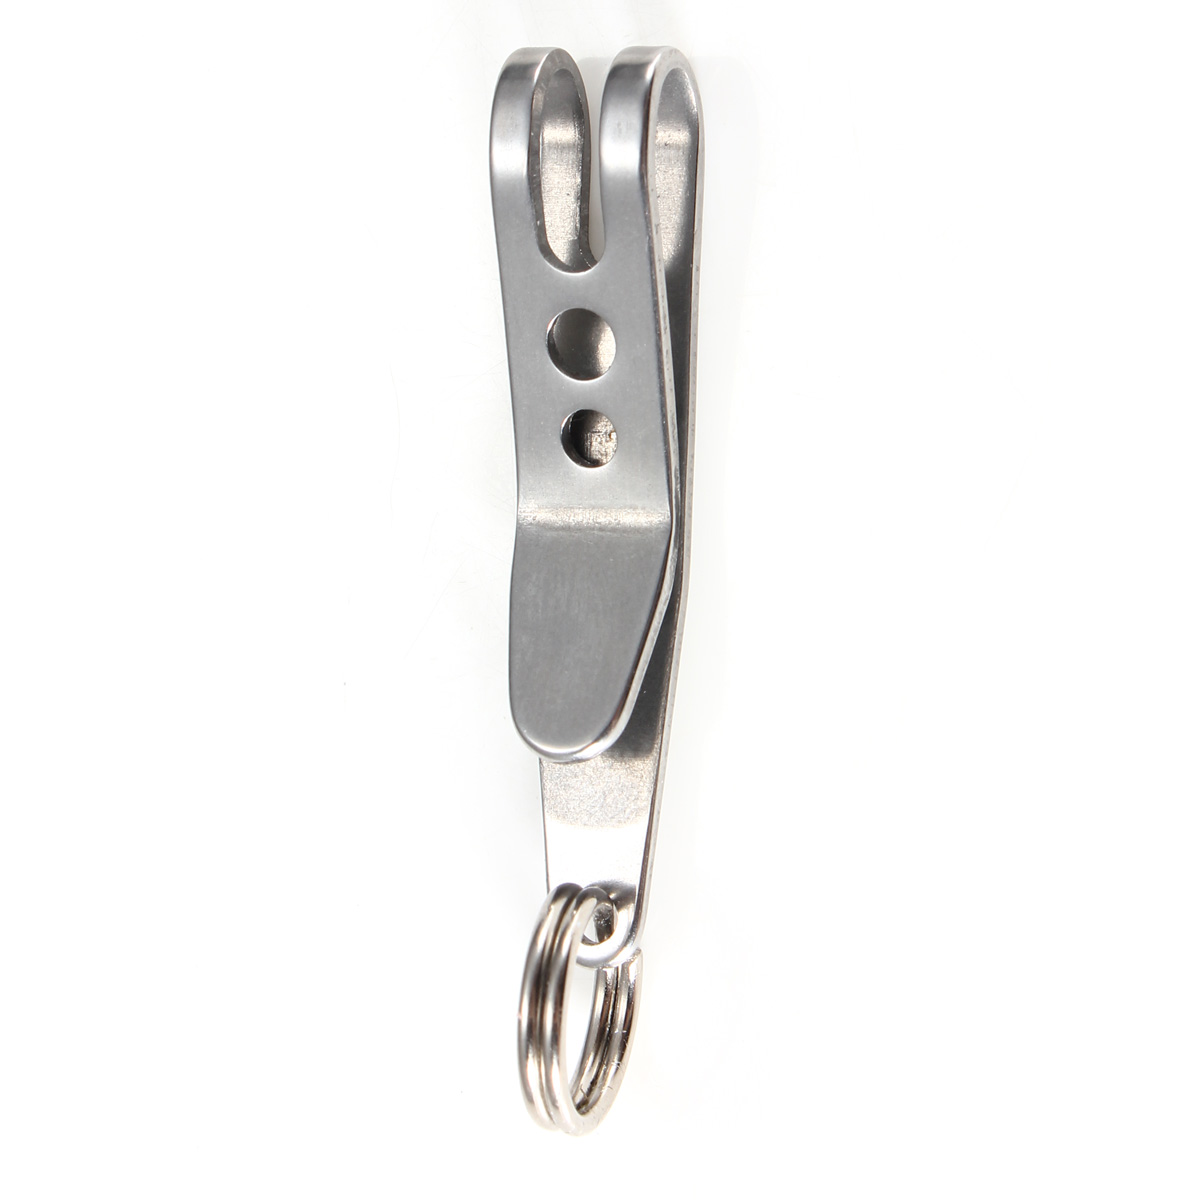 Xtools-EDC-Mini-Clip-Flashlight-Clip-Money-Cash-Holder-Key-Chain-Clip-With-Ring-988356-2